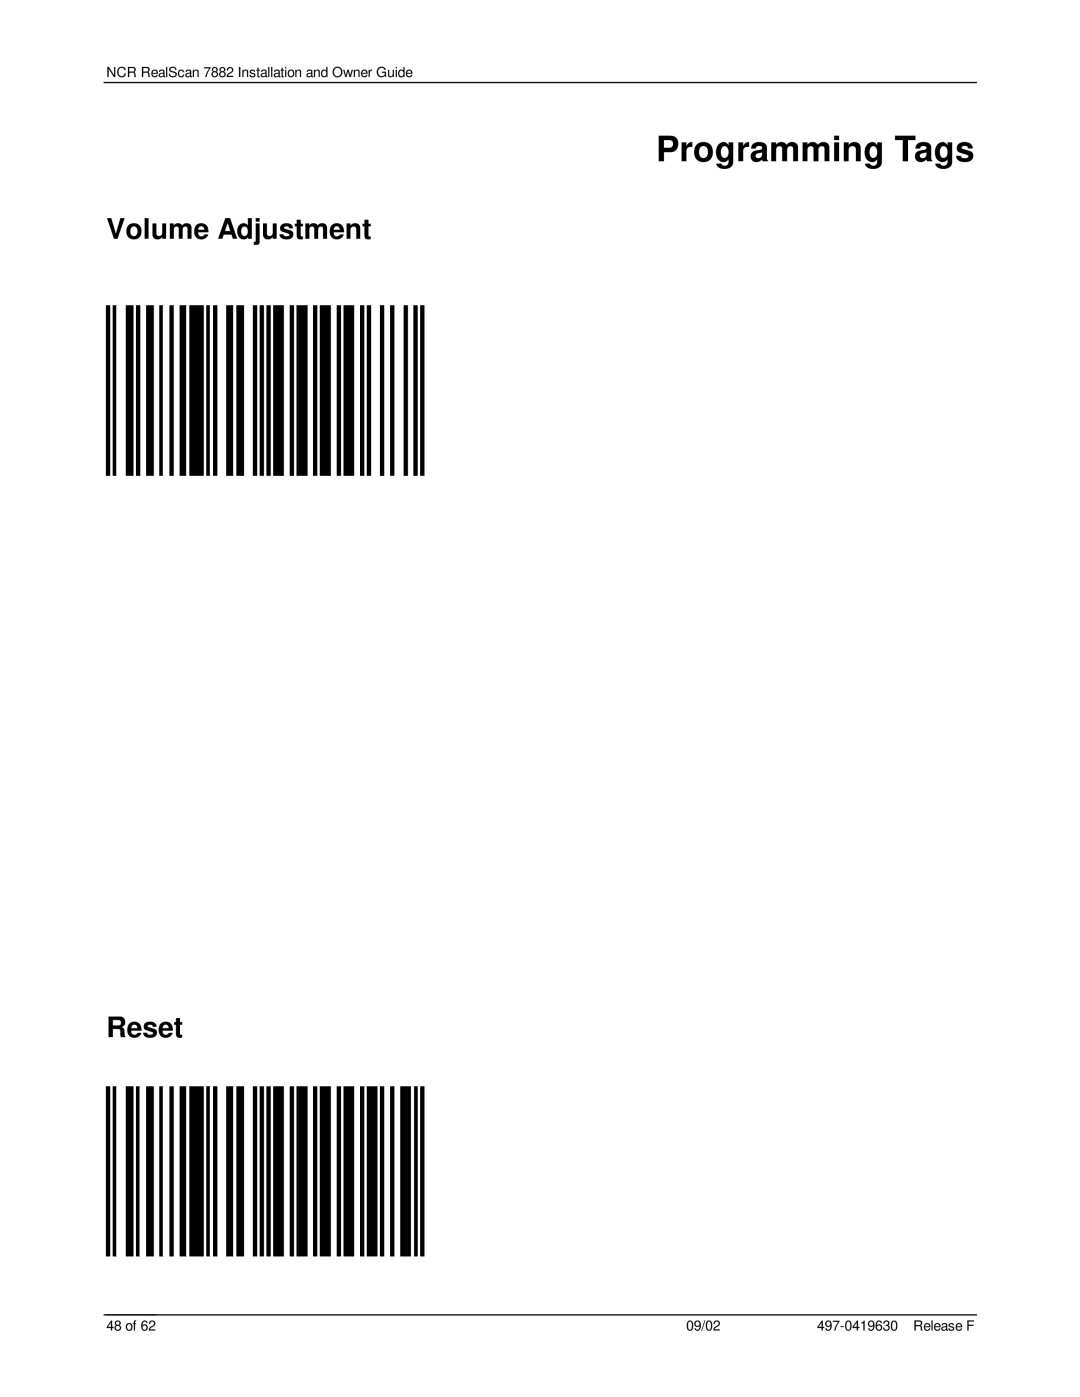 NCR 7882 manual Programming Tags, Volume Adjustment Reset 